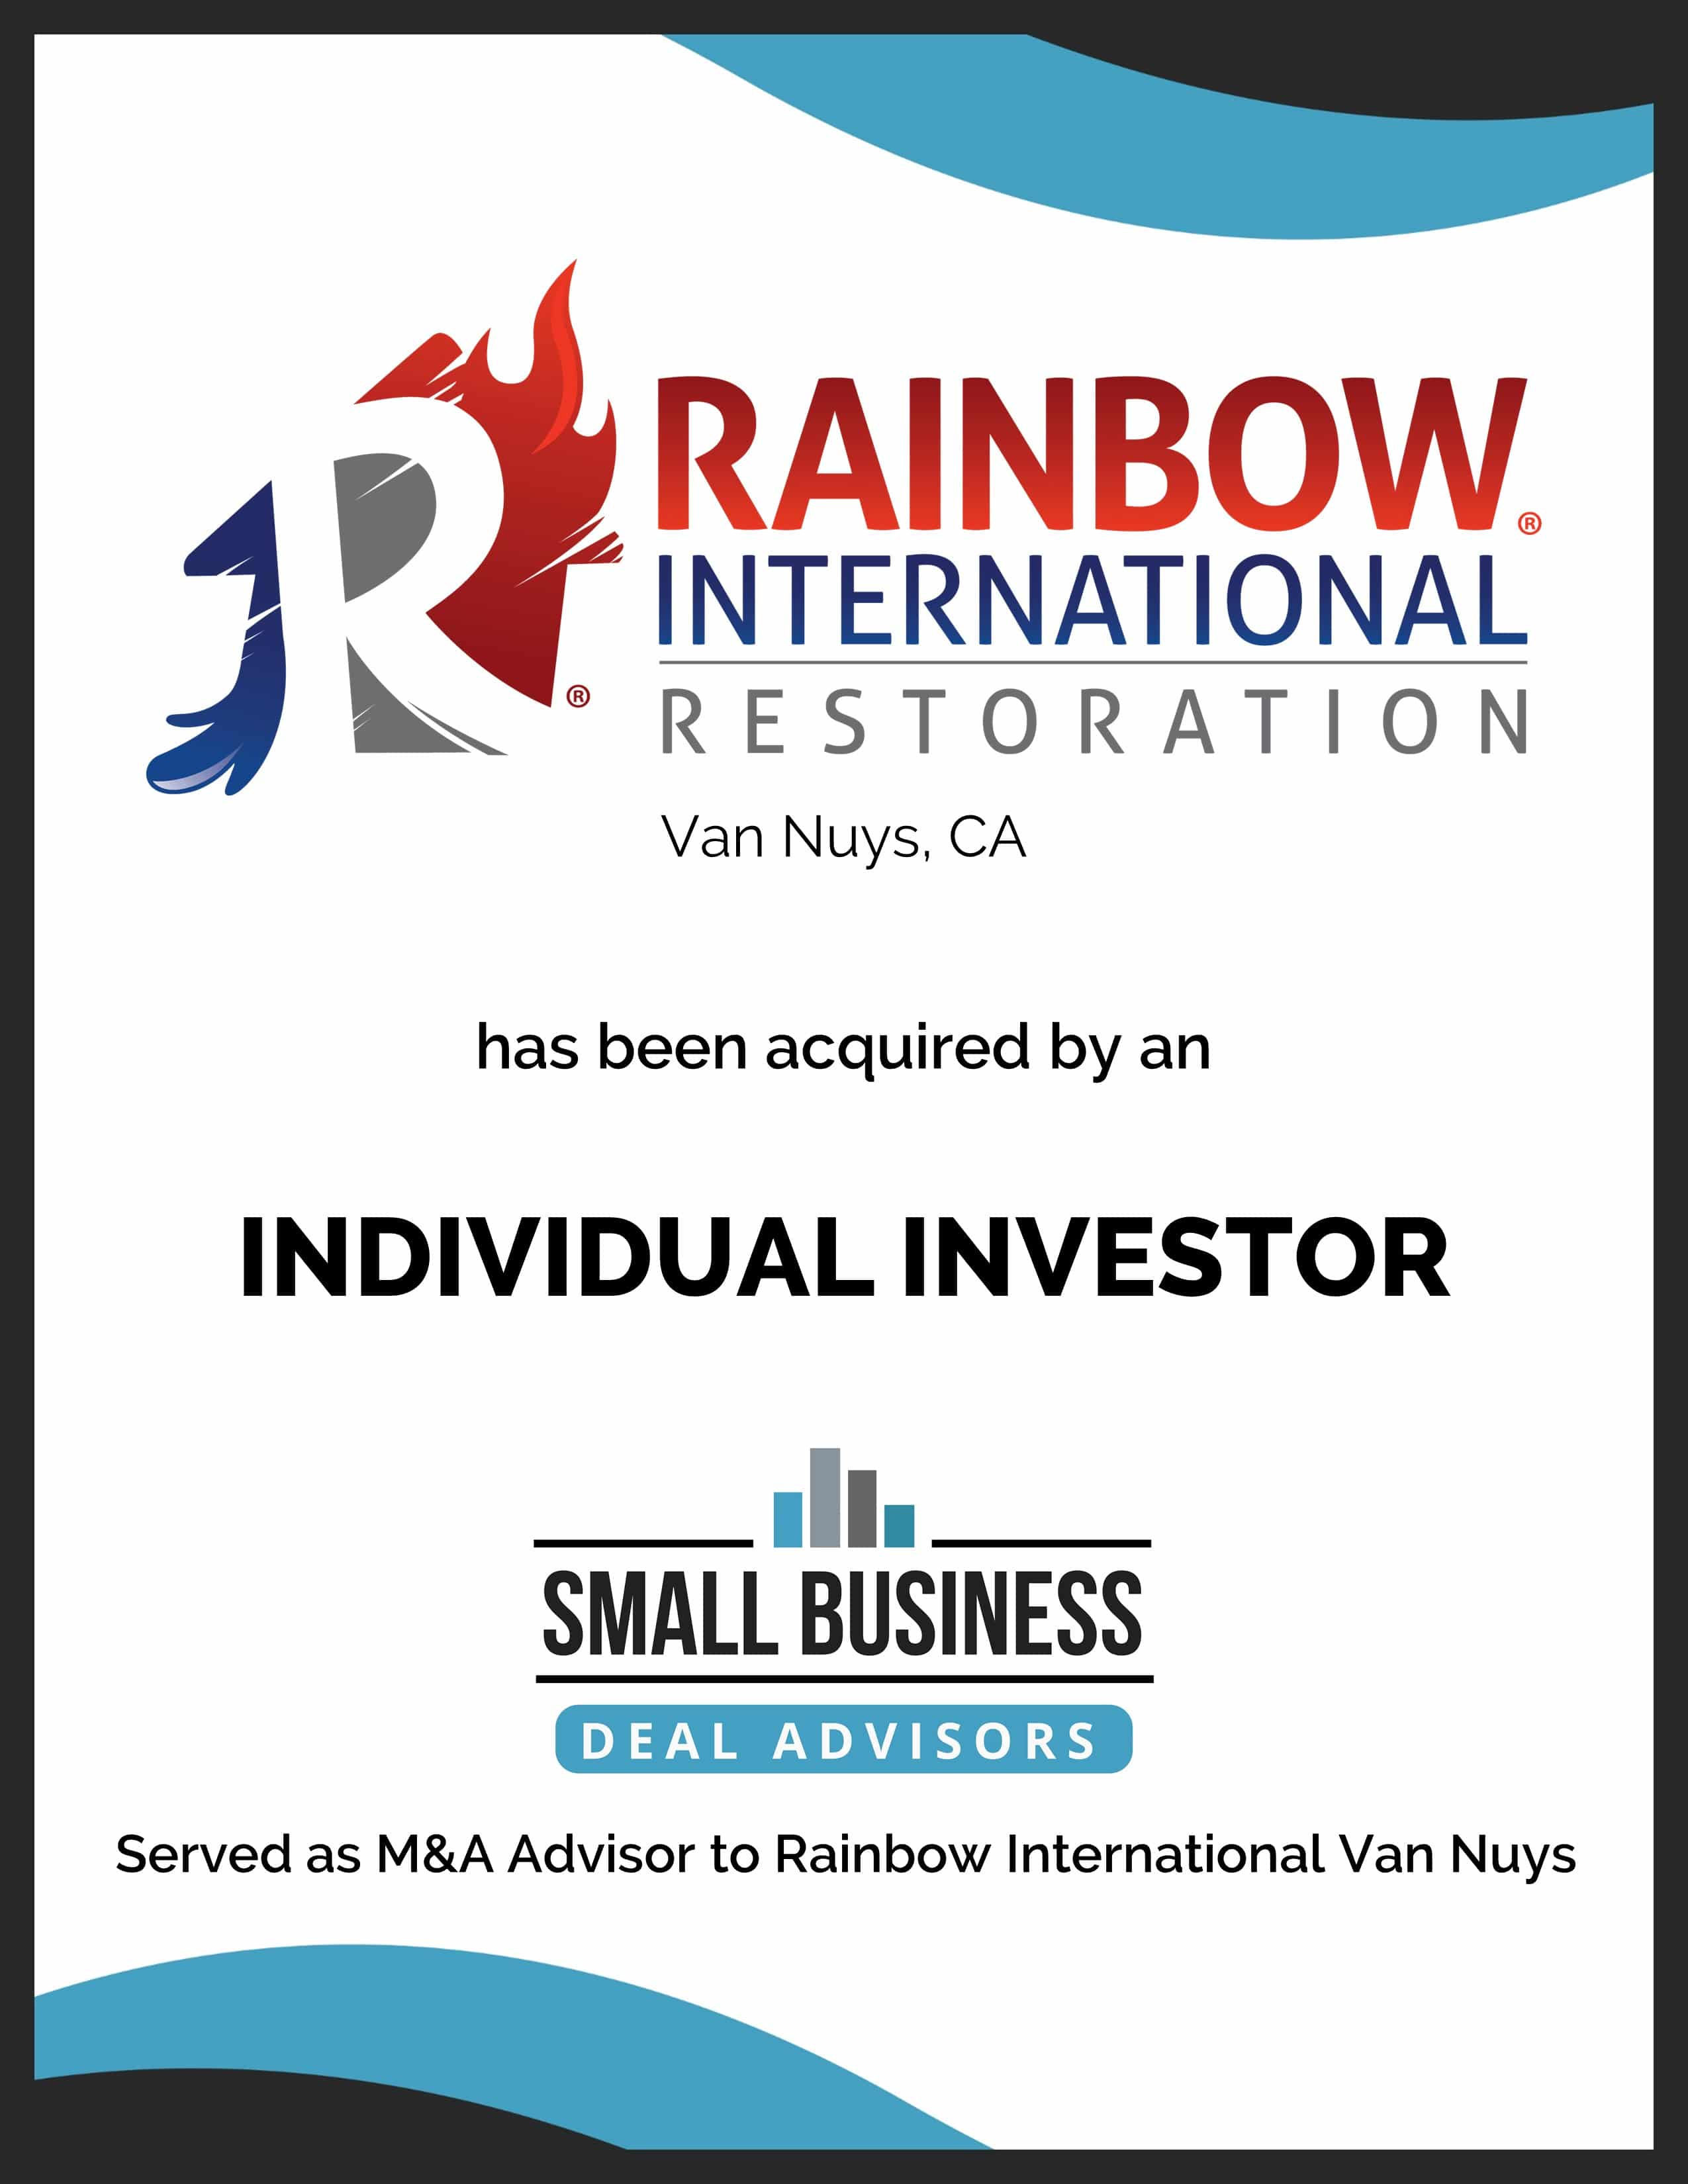 Rainbow International of Van Nuys Sold to Individual Investor